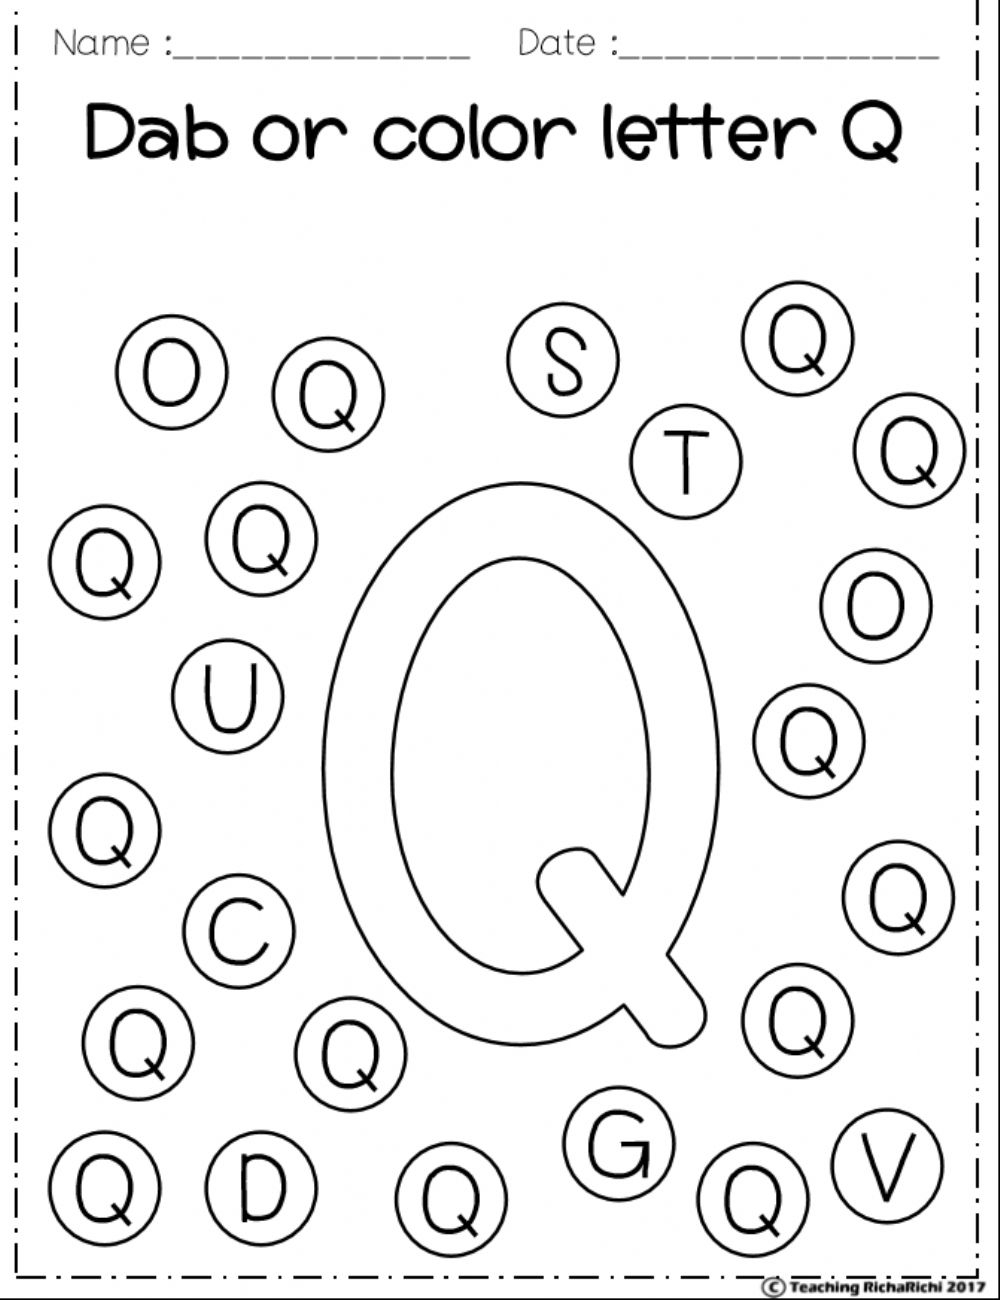 Letter Qq: The Alphabet Worksheet for Alphabet Dab Worksheets